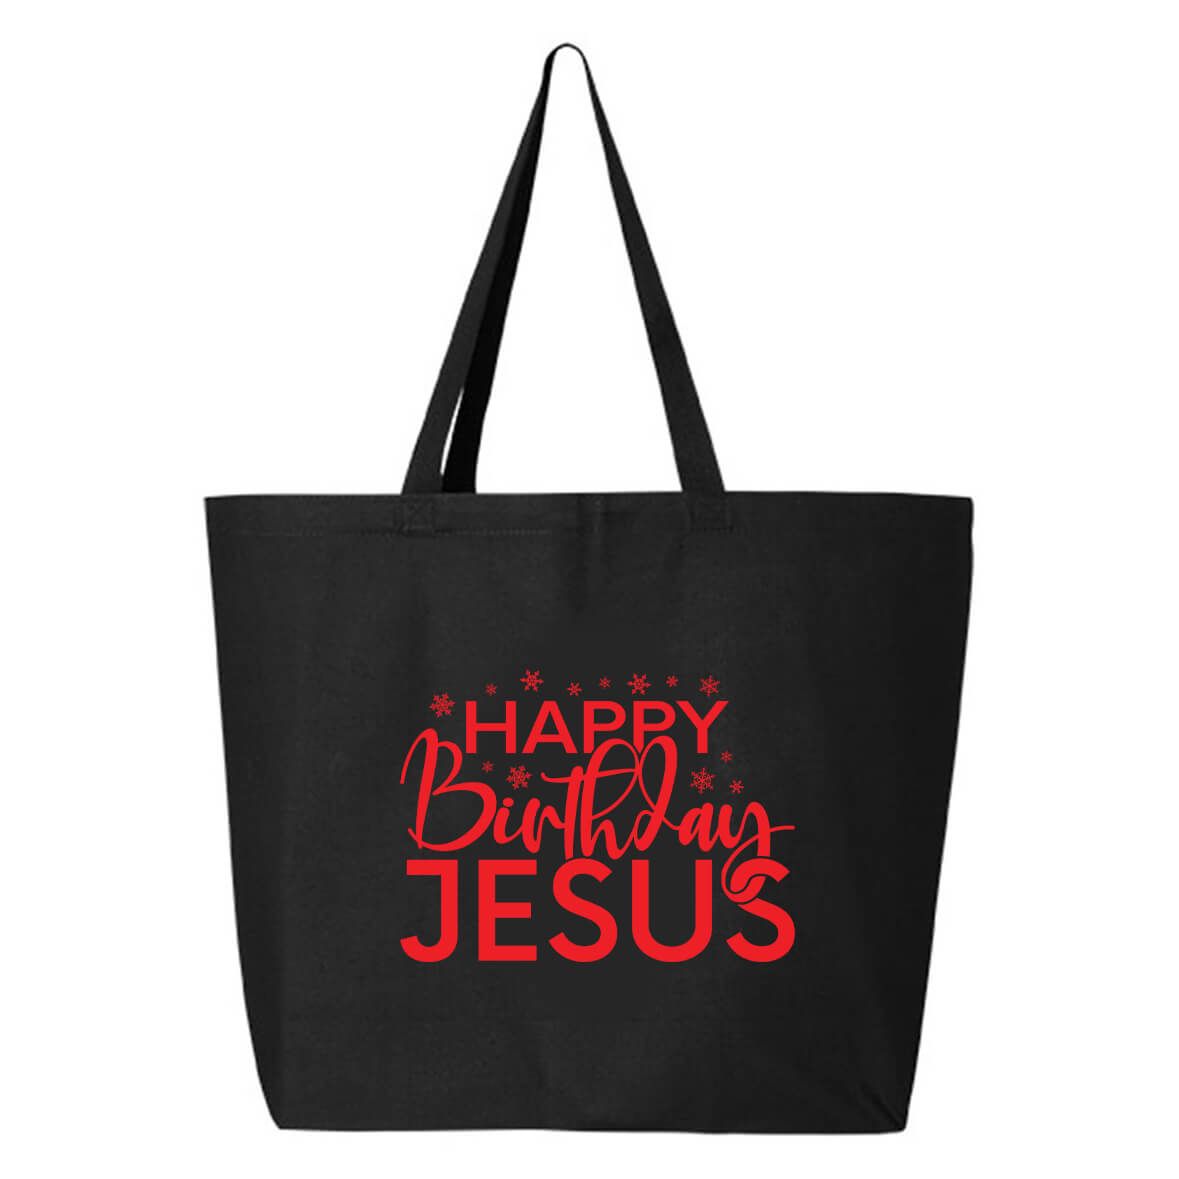 Happy Birthday Jesus Jumbo Tote Canvas Bag